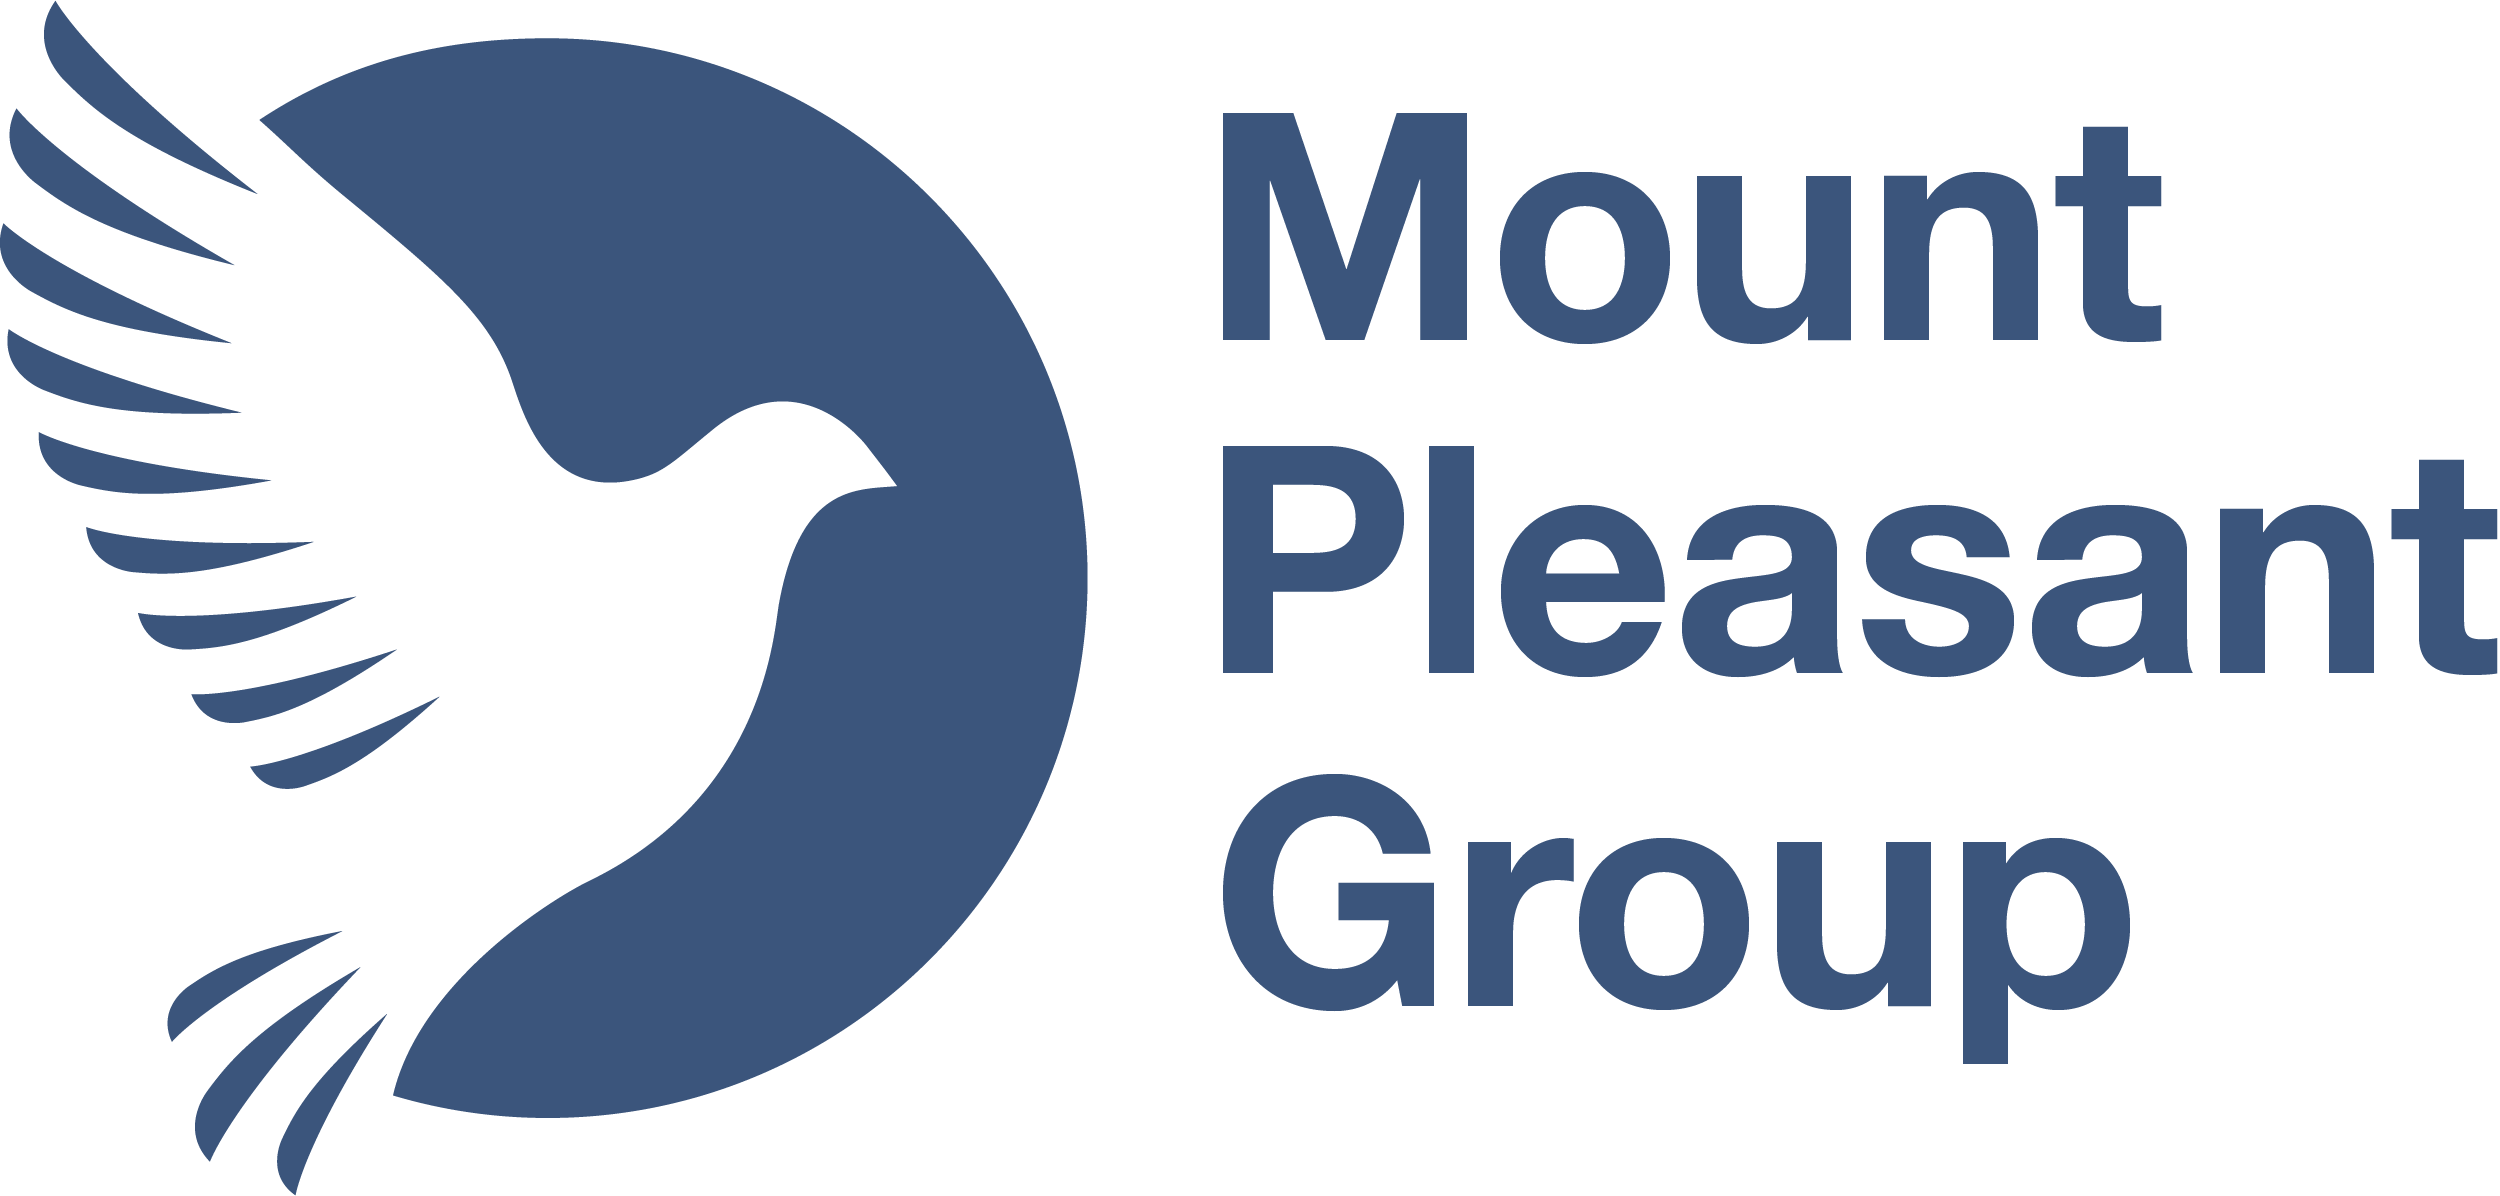 Mount Pleasant Group